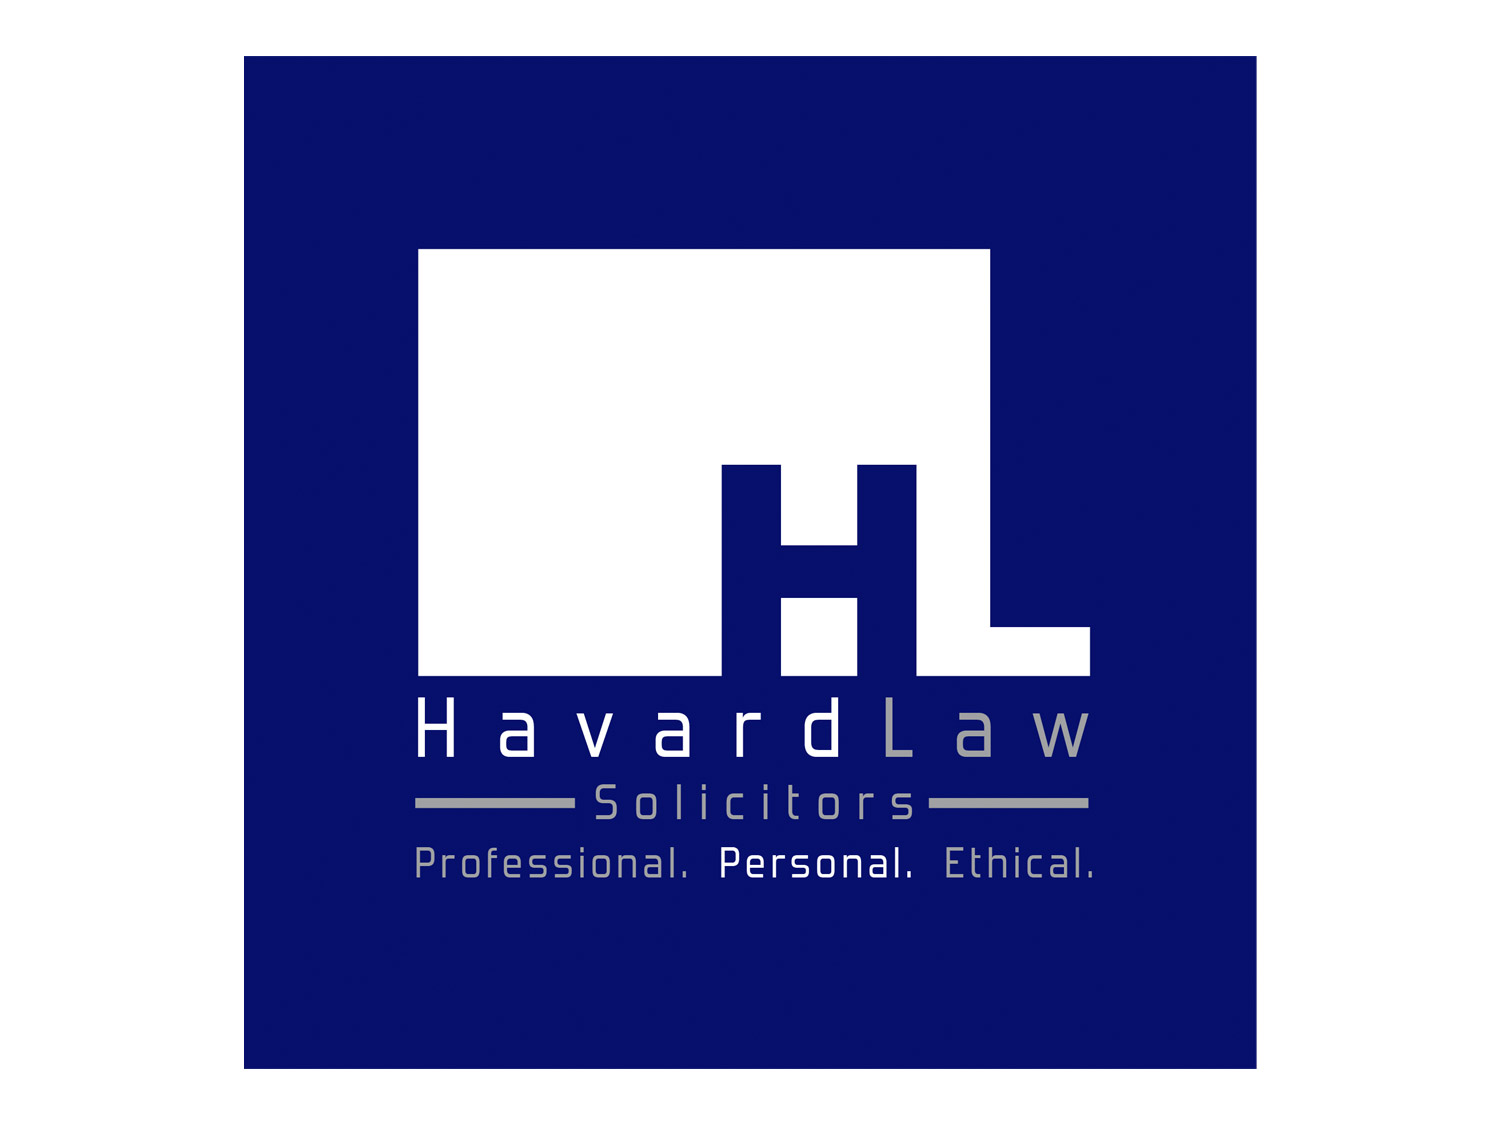 Havard Law case study website